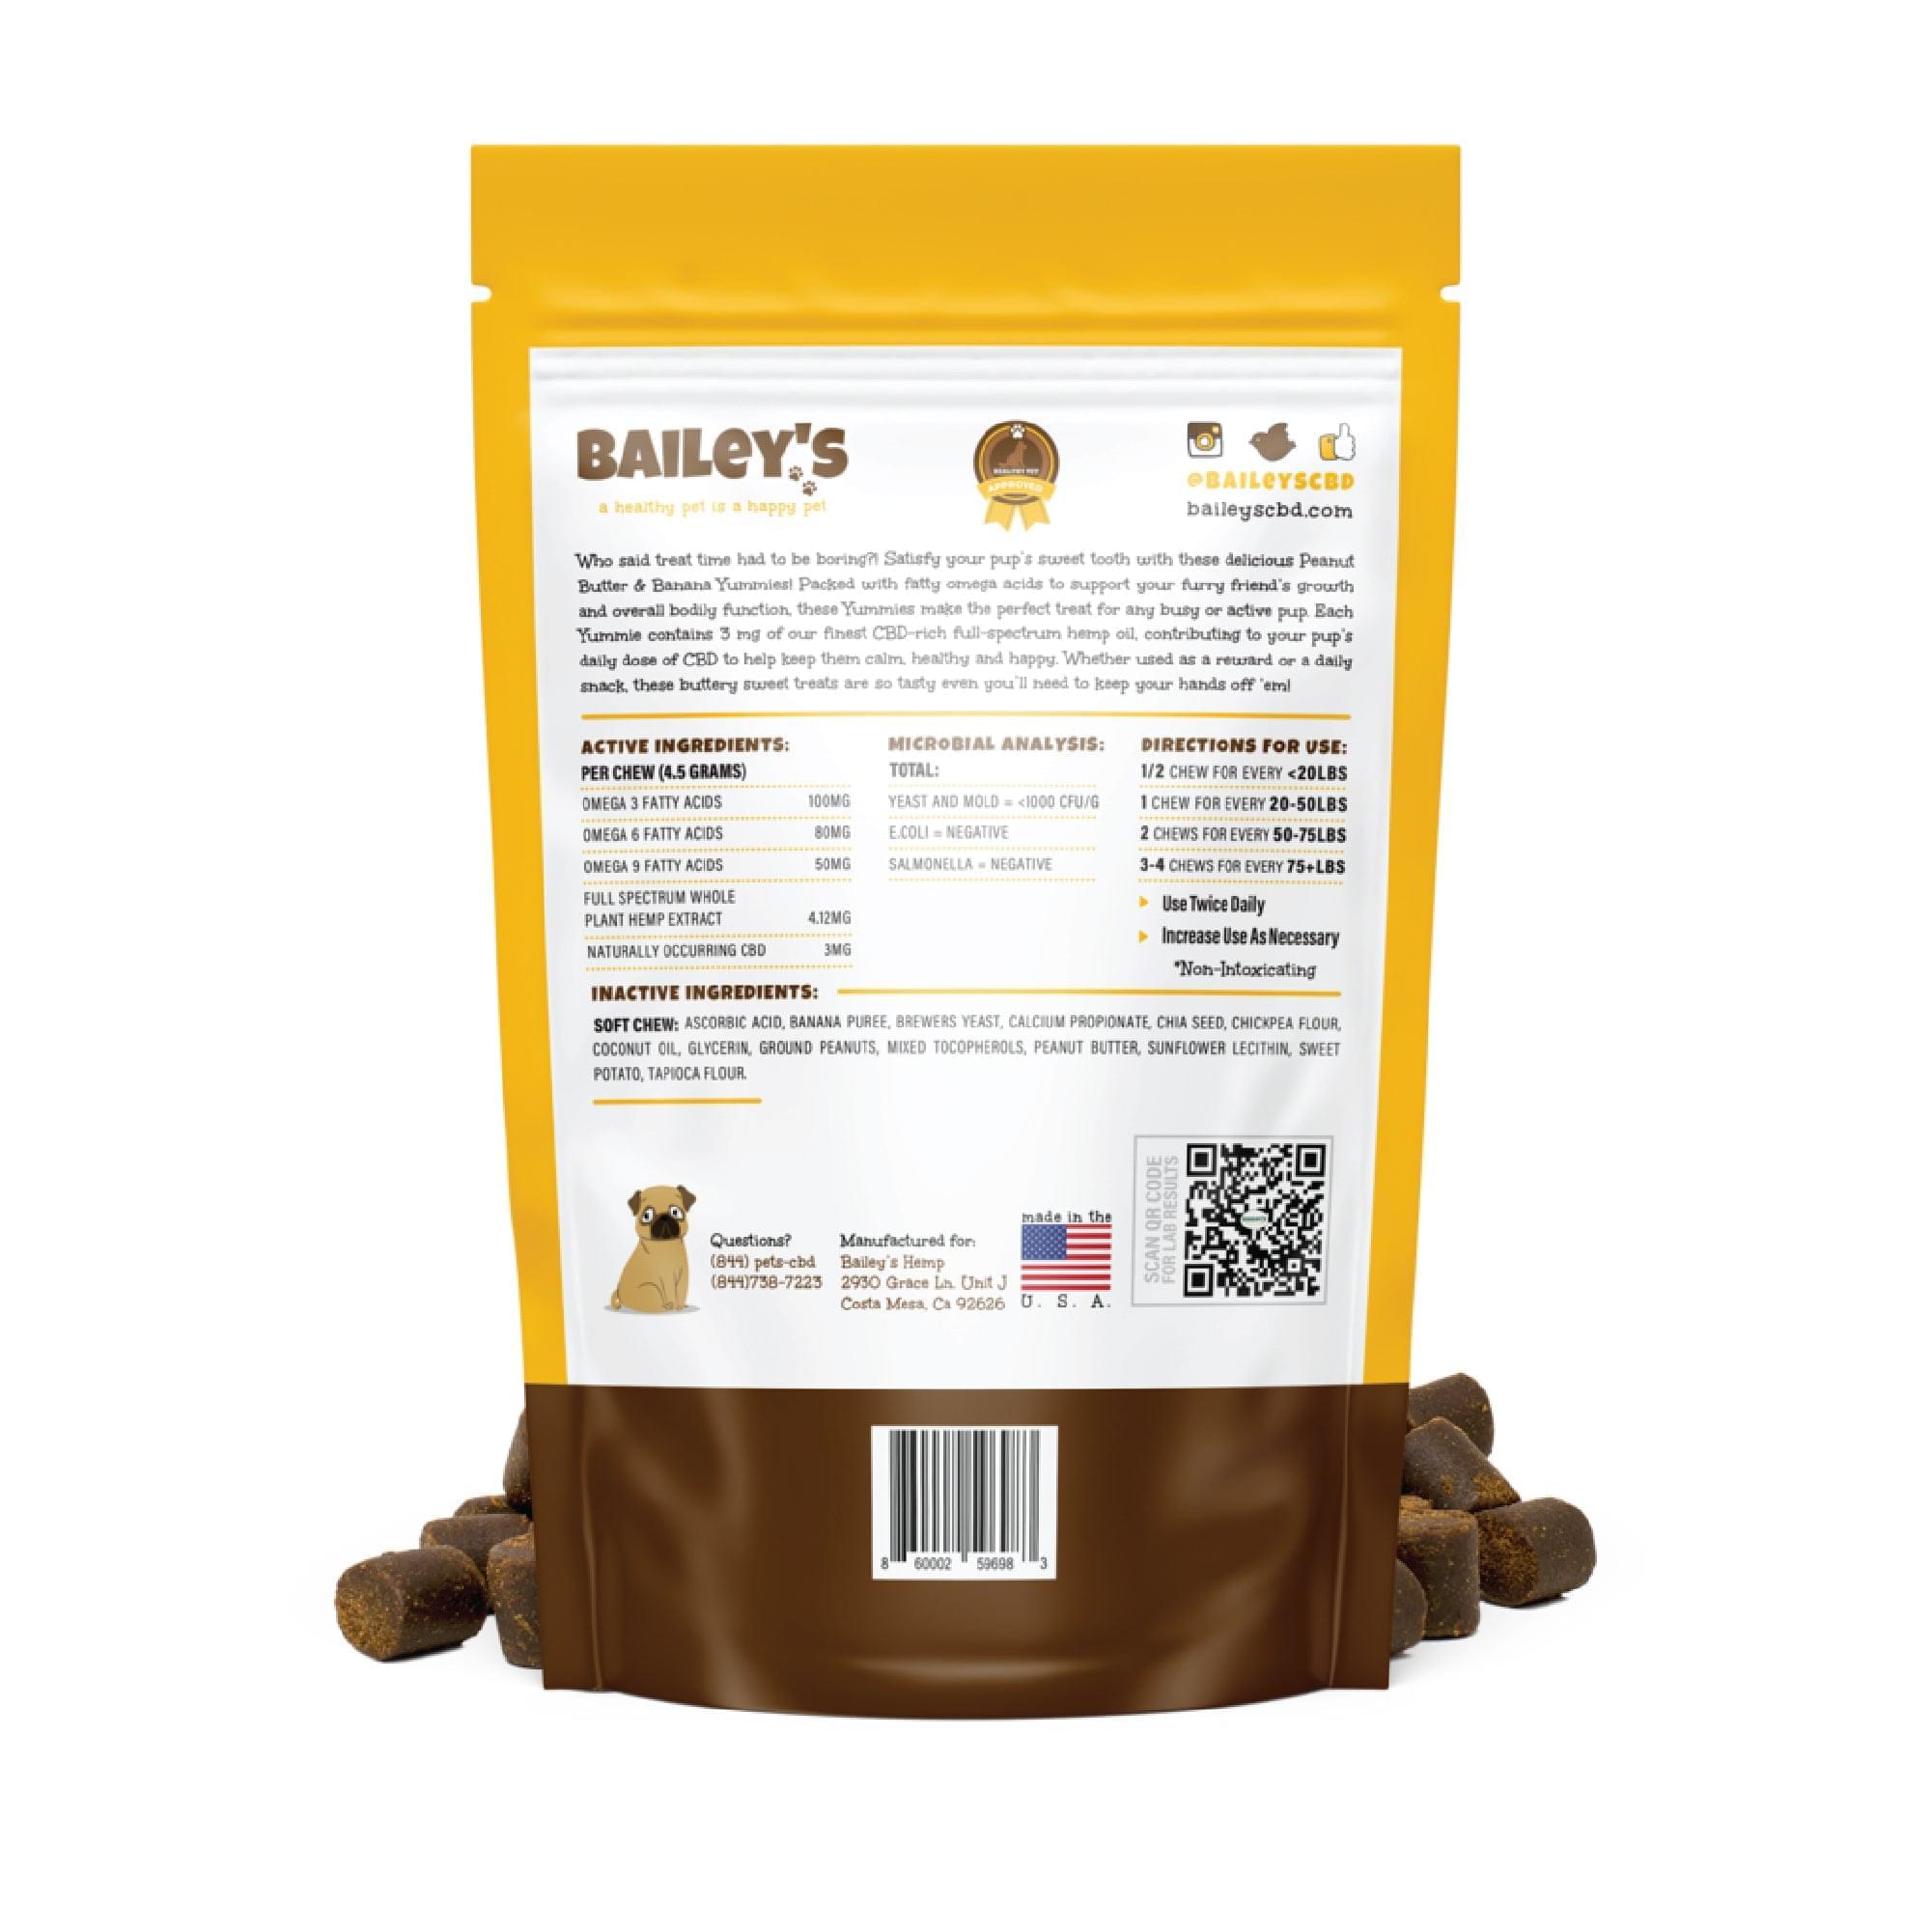 Bailey's Calming CBD Yummies - CBD Peanut Butter for Dogs - Naturally Mignon CBD